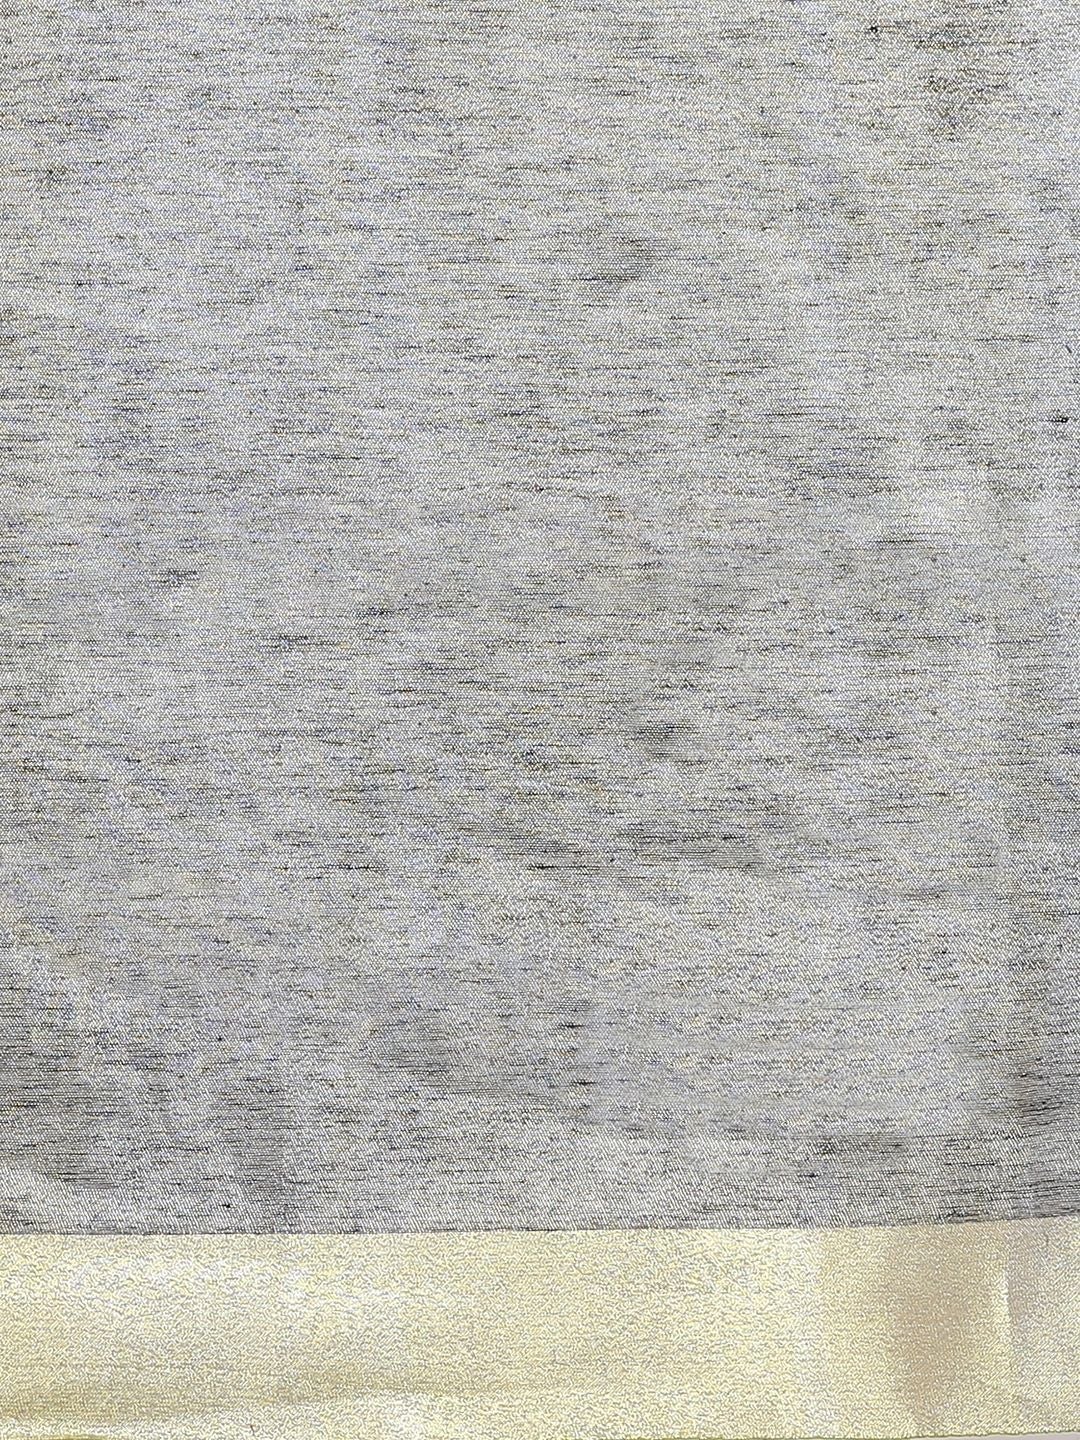 Women's Organic Uppadda Tissue Linen Handloom Saree - Olive Mist